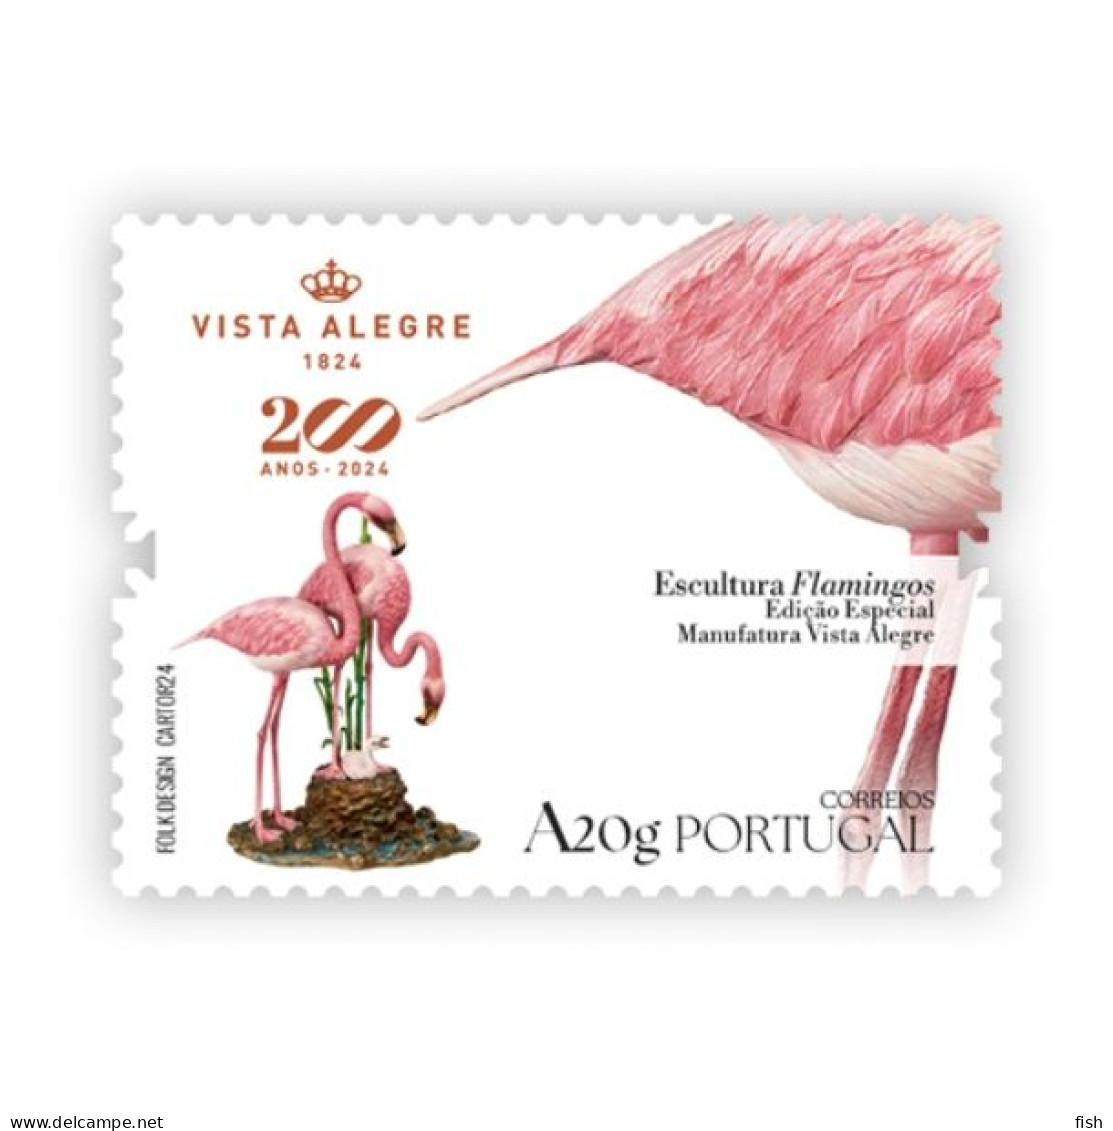 Portugal ** & 200 Years Of Vista Alegre, Flamingo Sculpture, Special Edition Manufatura Vista Alegre 1824-2024 (799) - Fabriken Und Industrien